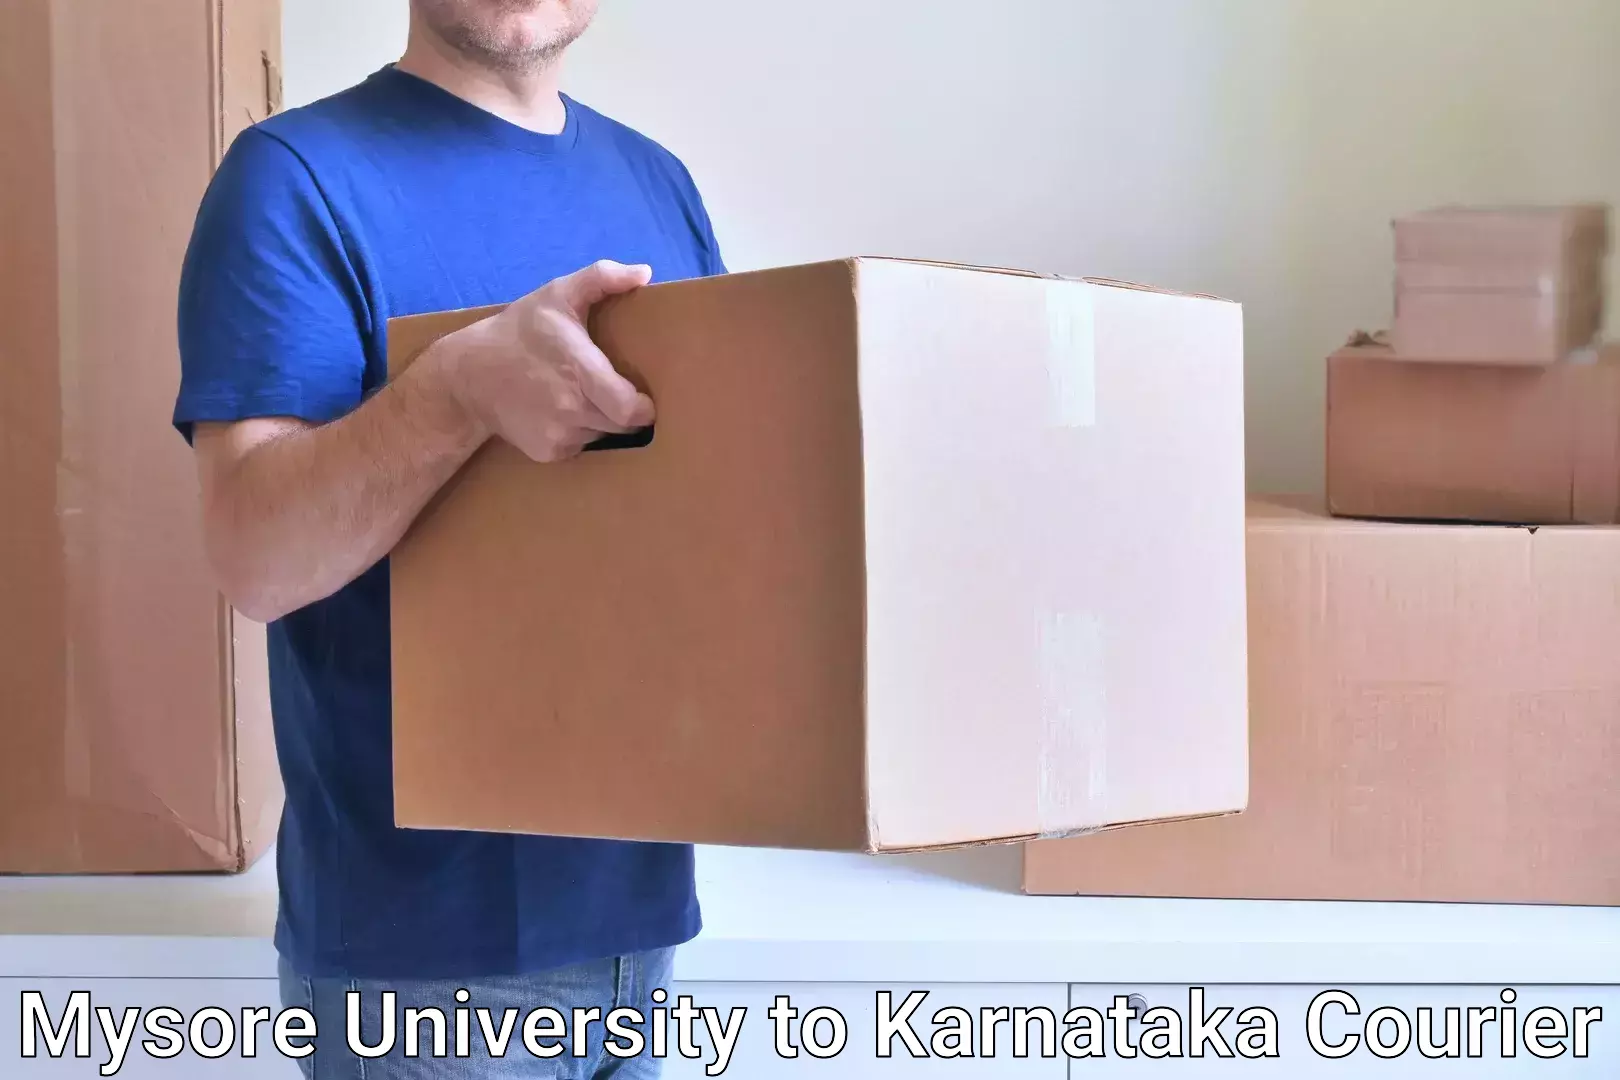 Holiday shipping services Mysore University to Karnataka